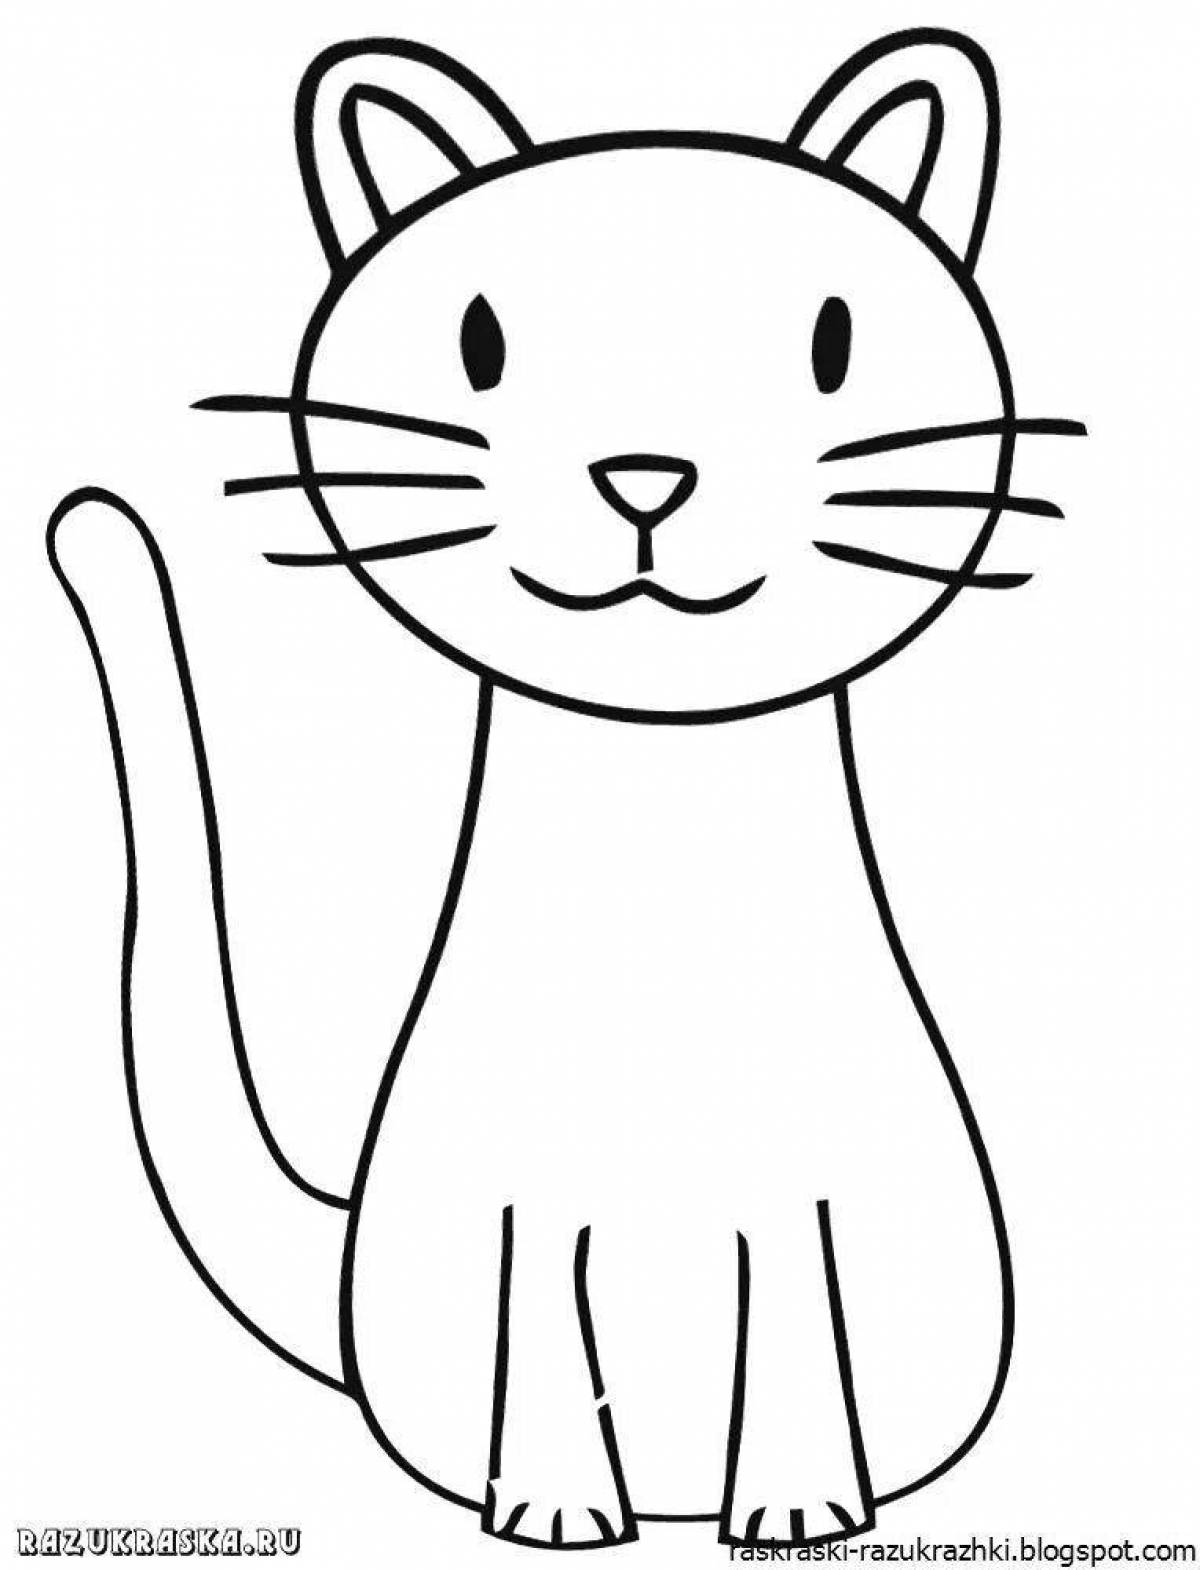 Cute cat coloring book for kids